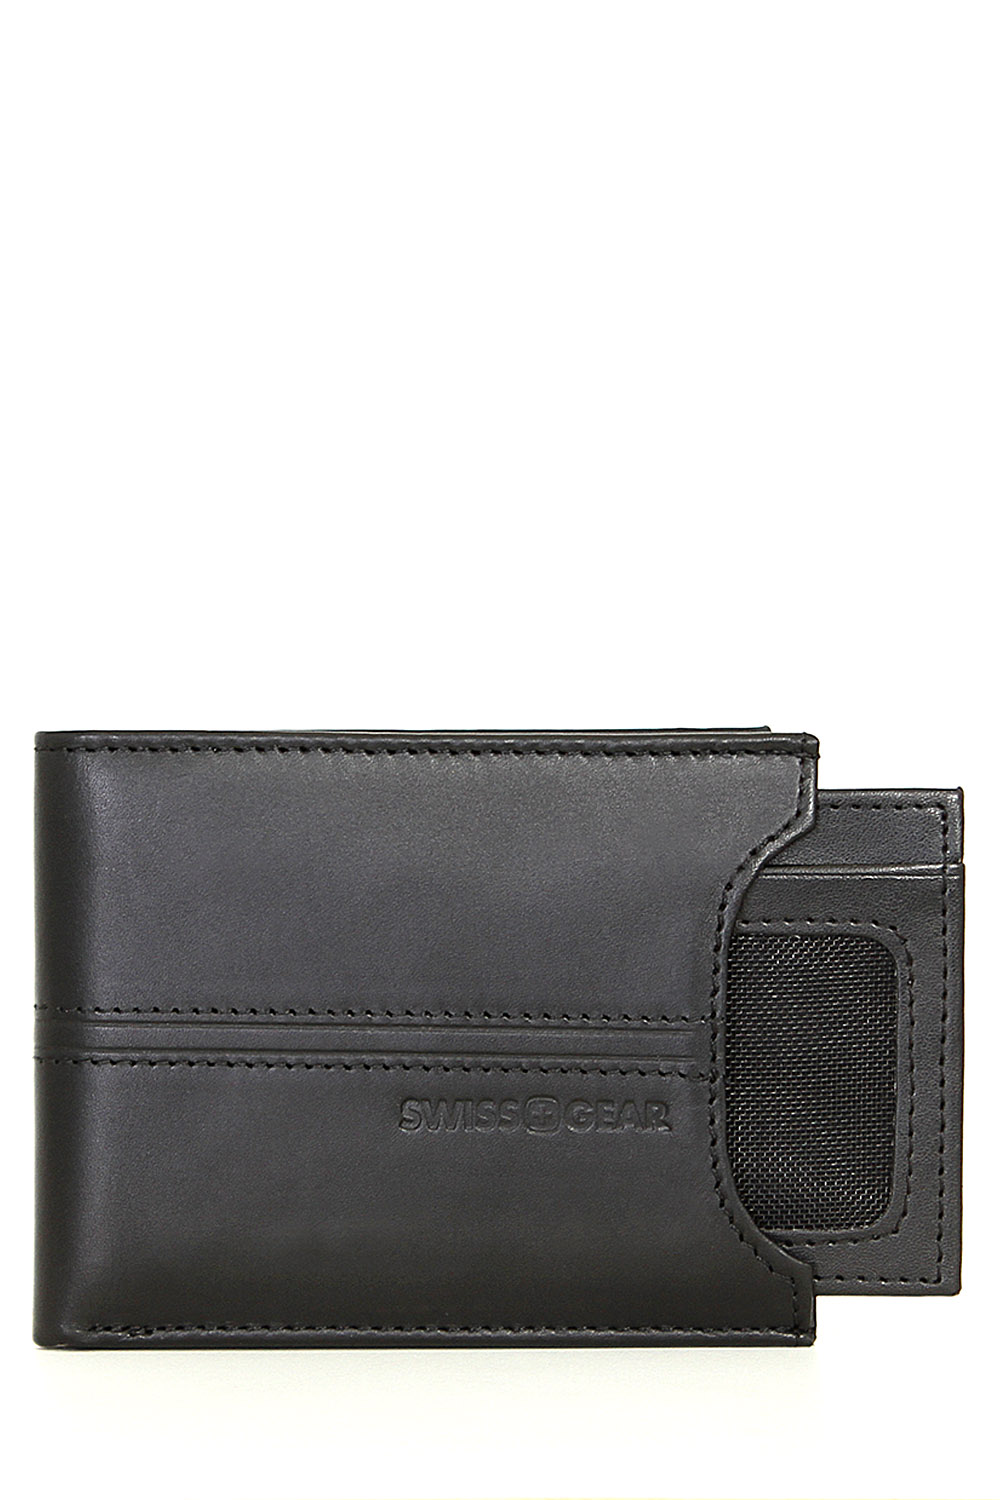 SWISSGEAR Delmont Bifold Wallet with Card Case Slide-Out - Black